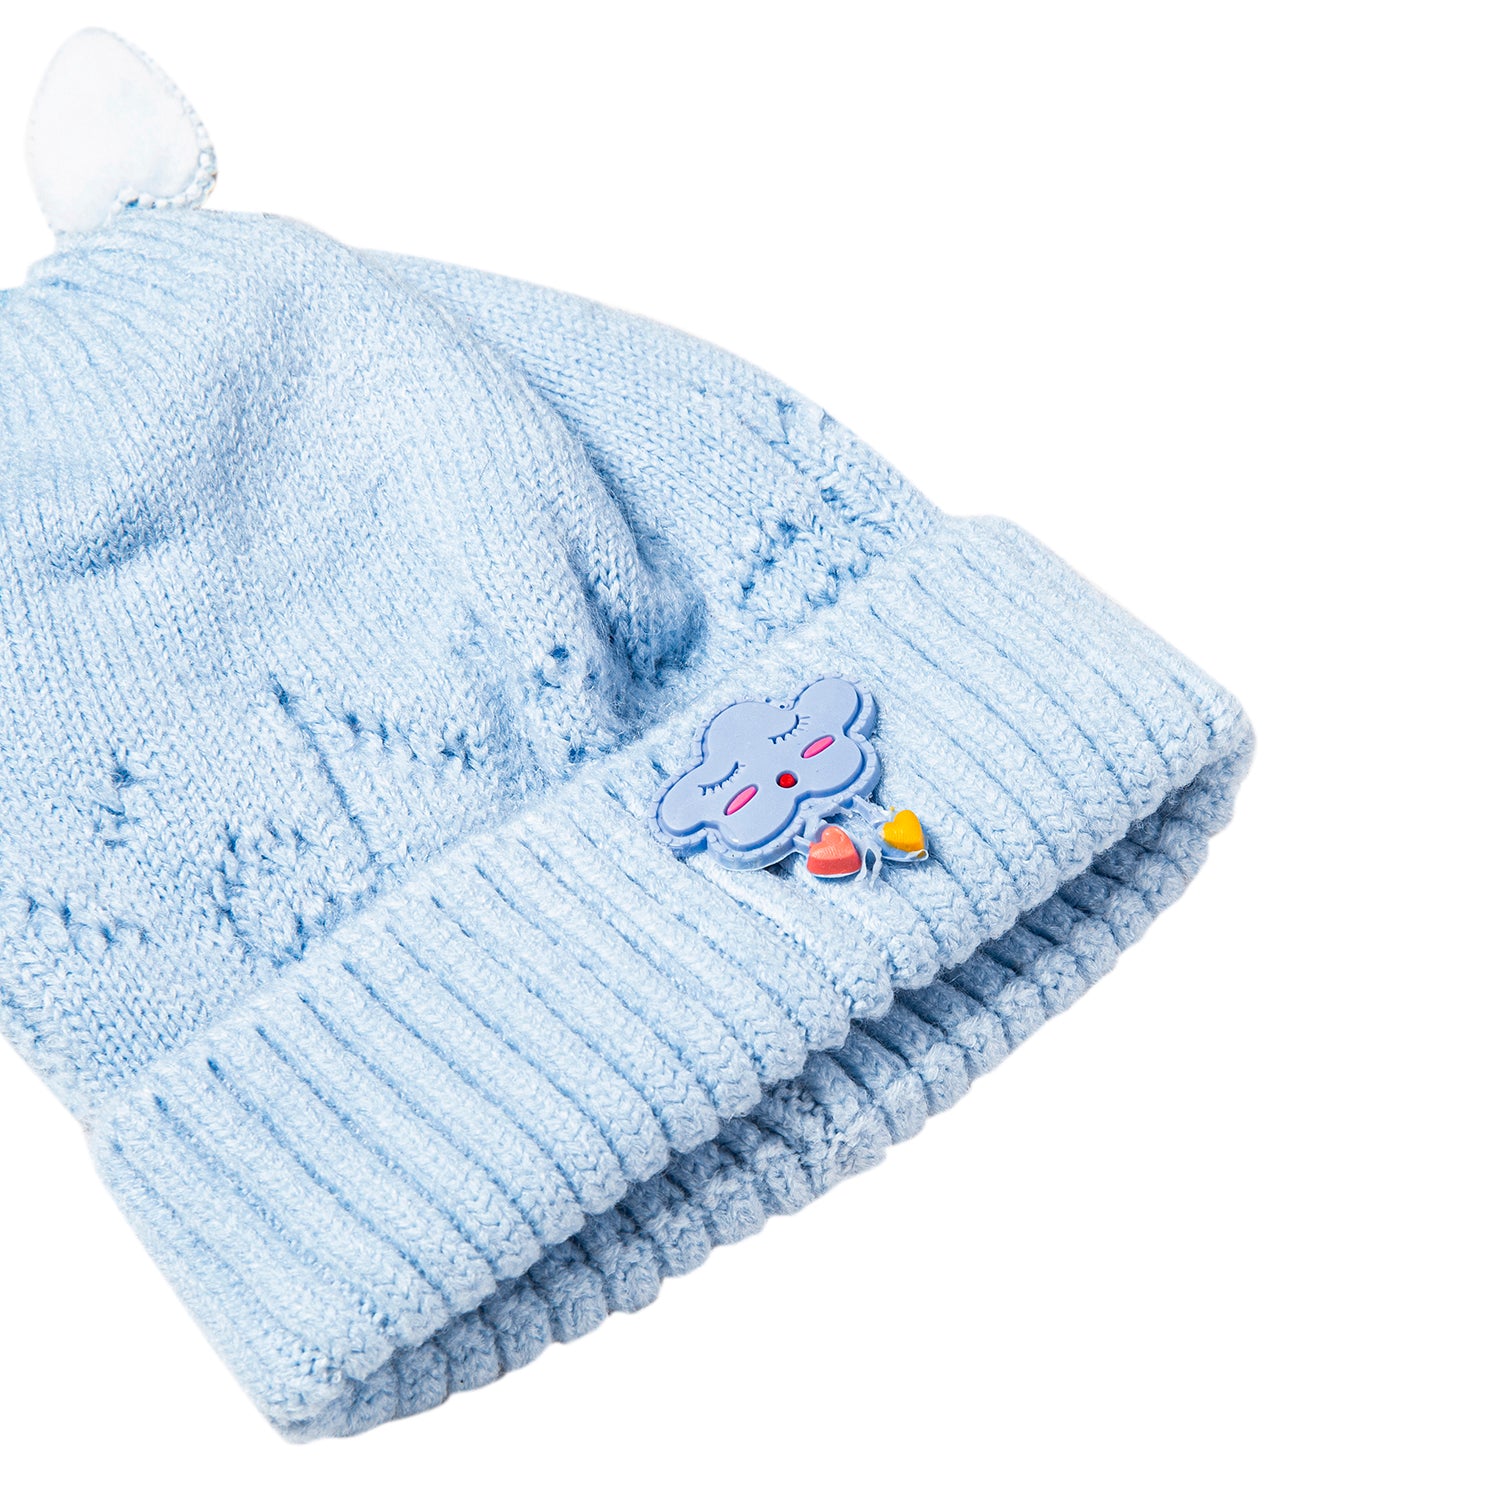 Baby Moo Knit Woollen Cap Winter Beanie Cloud Blue